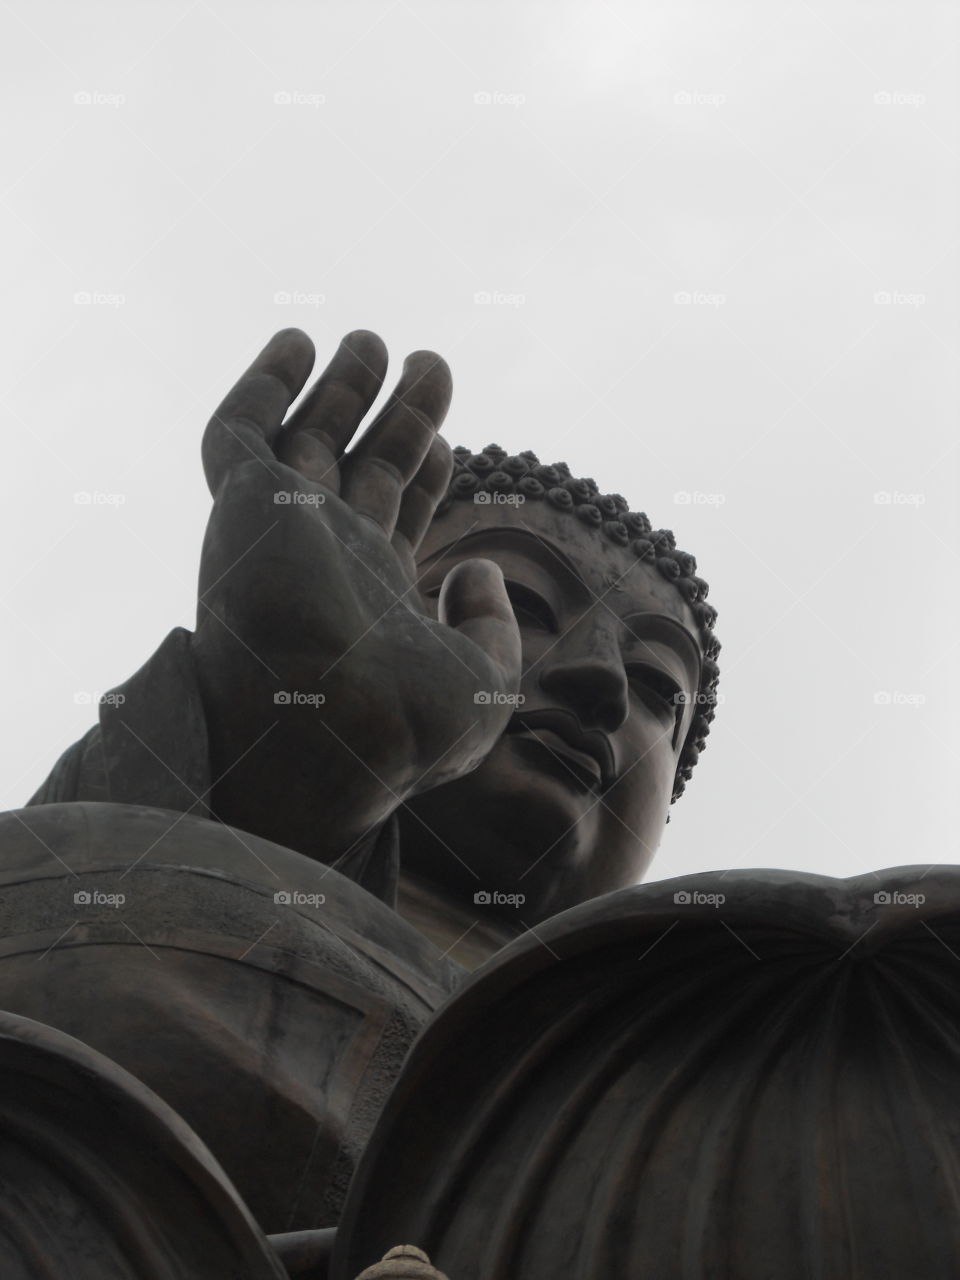 The Big Buddha/Tian Tan Buddha, Lantau Island Hong Kong